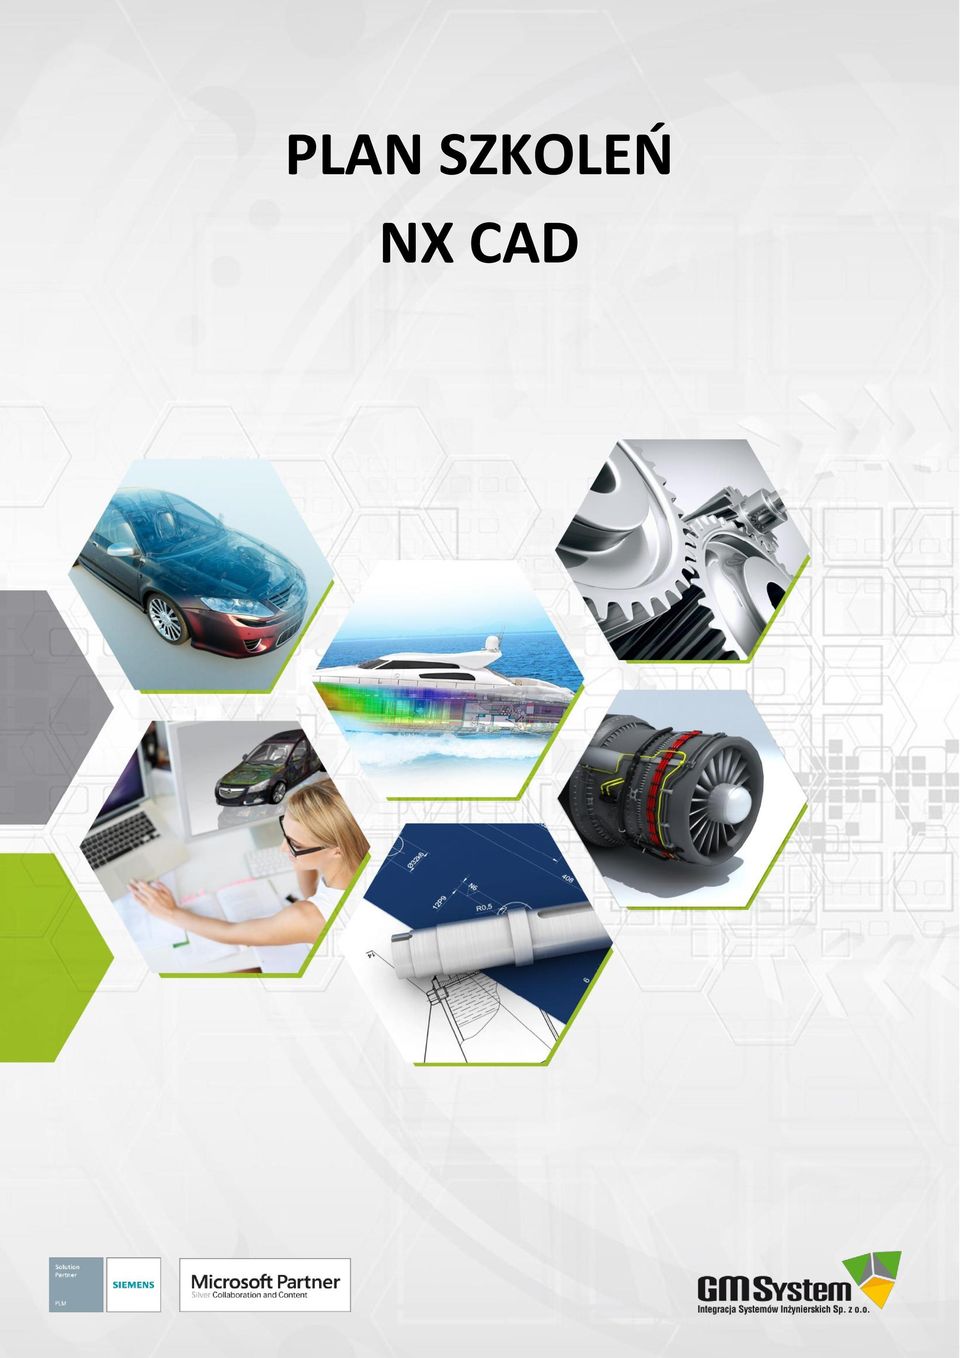 NX CAD